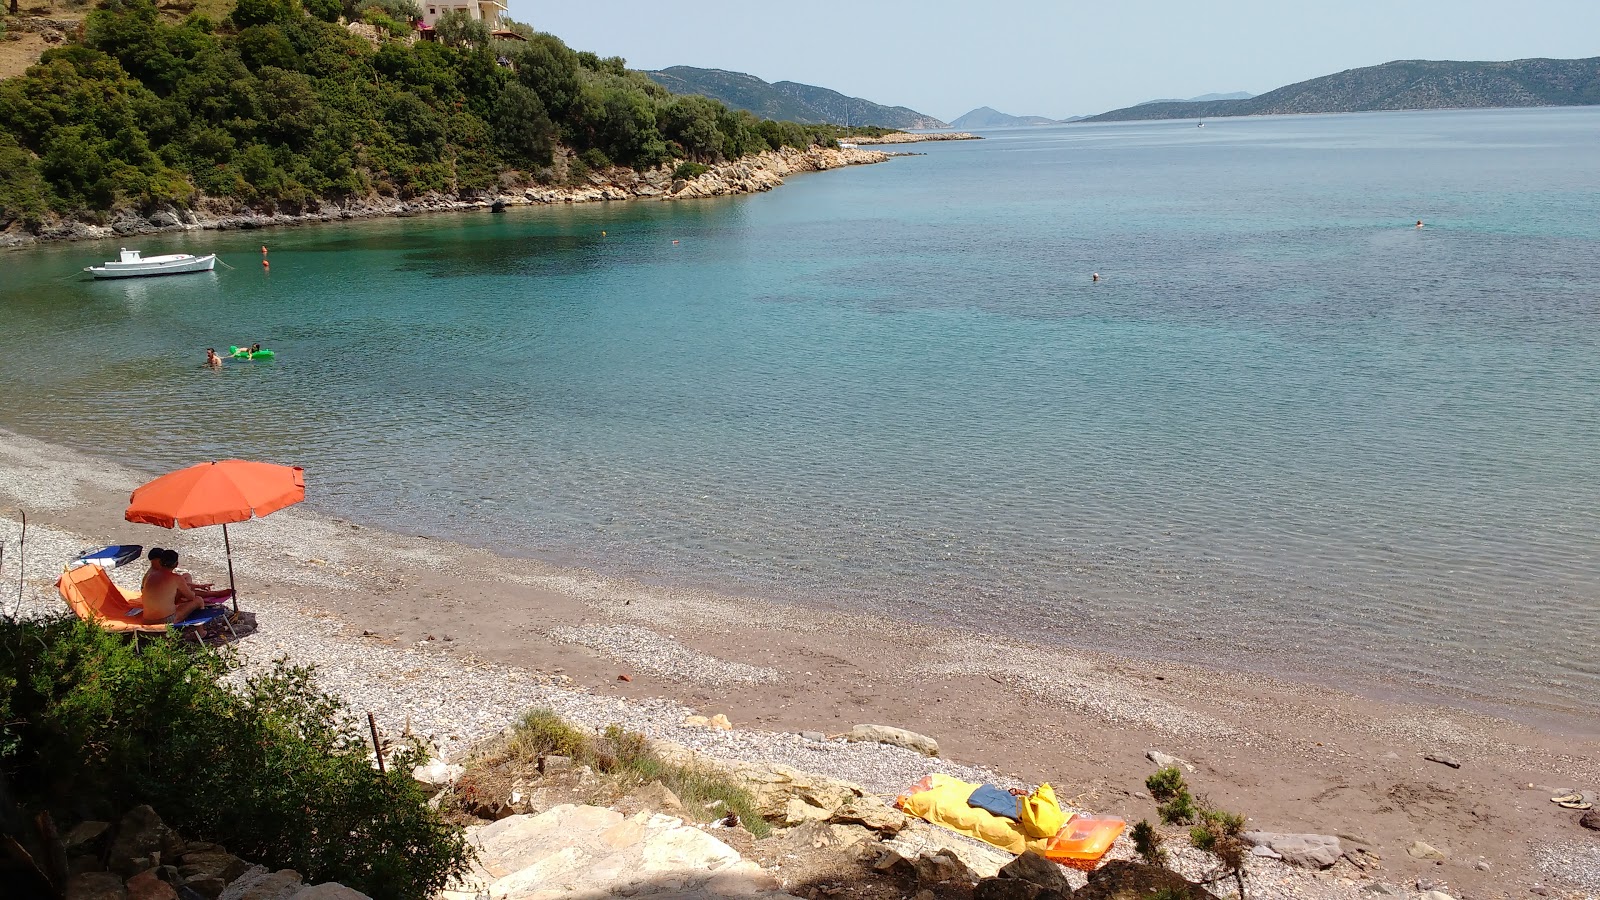 Foto af Agios Petros beach med turkis rent vand overflade